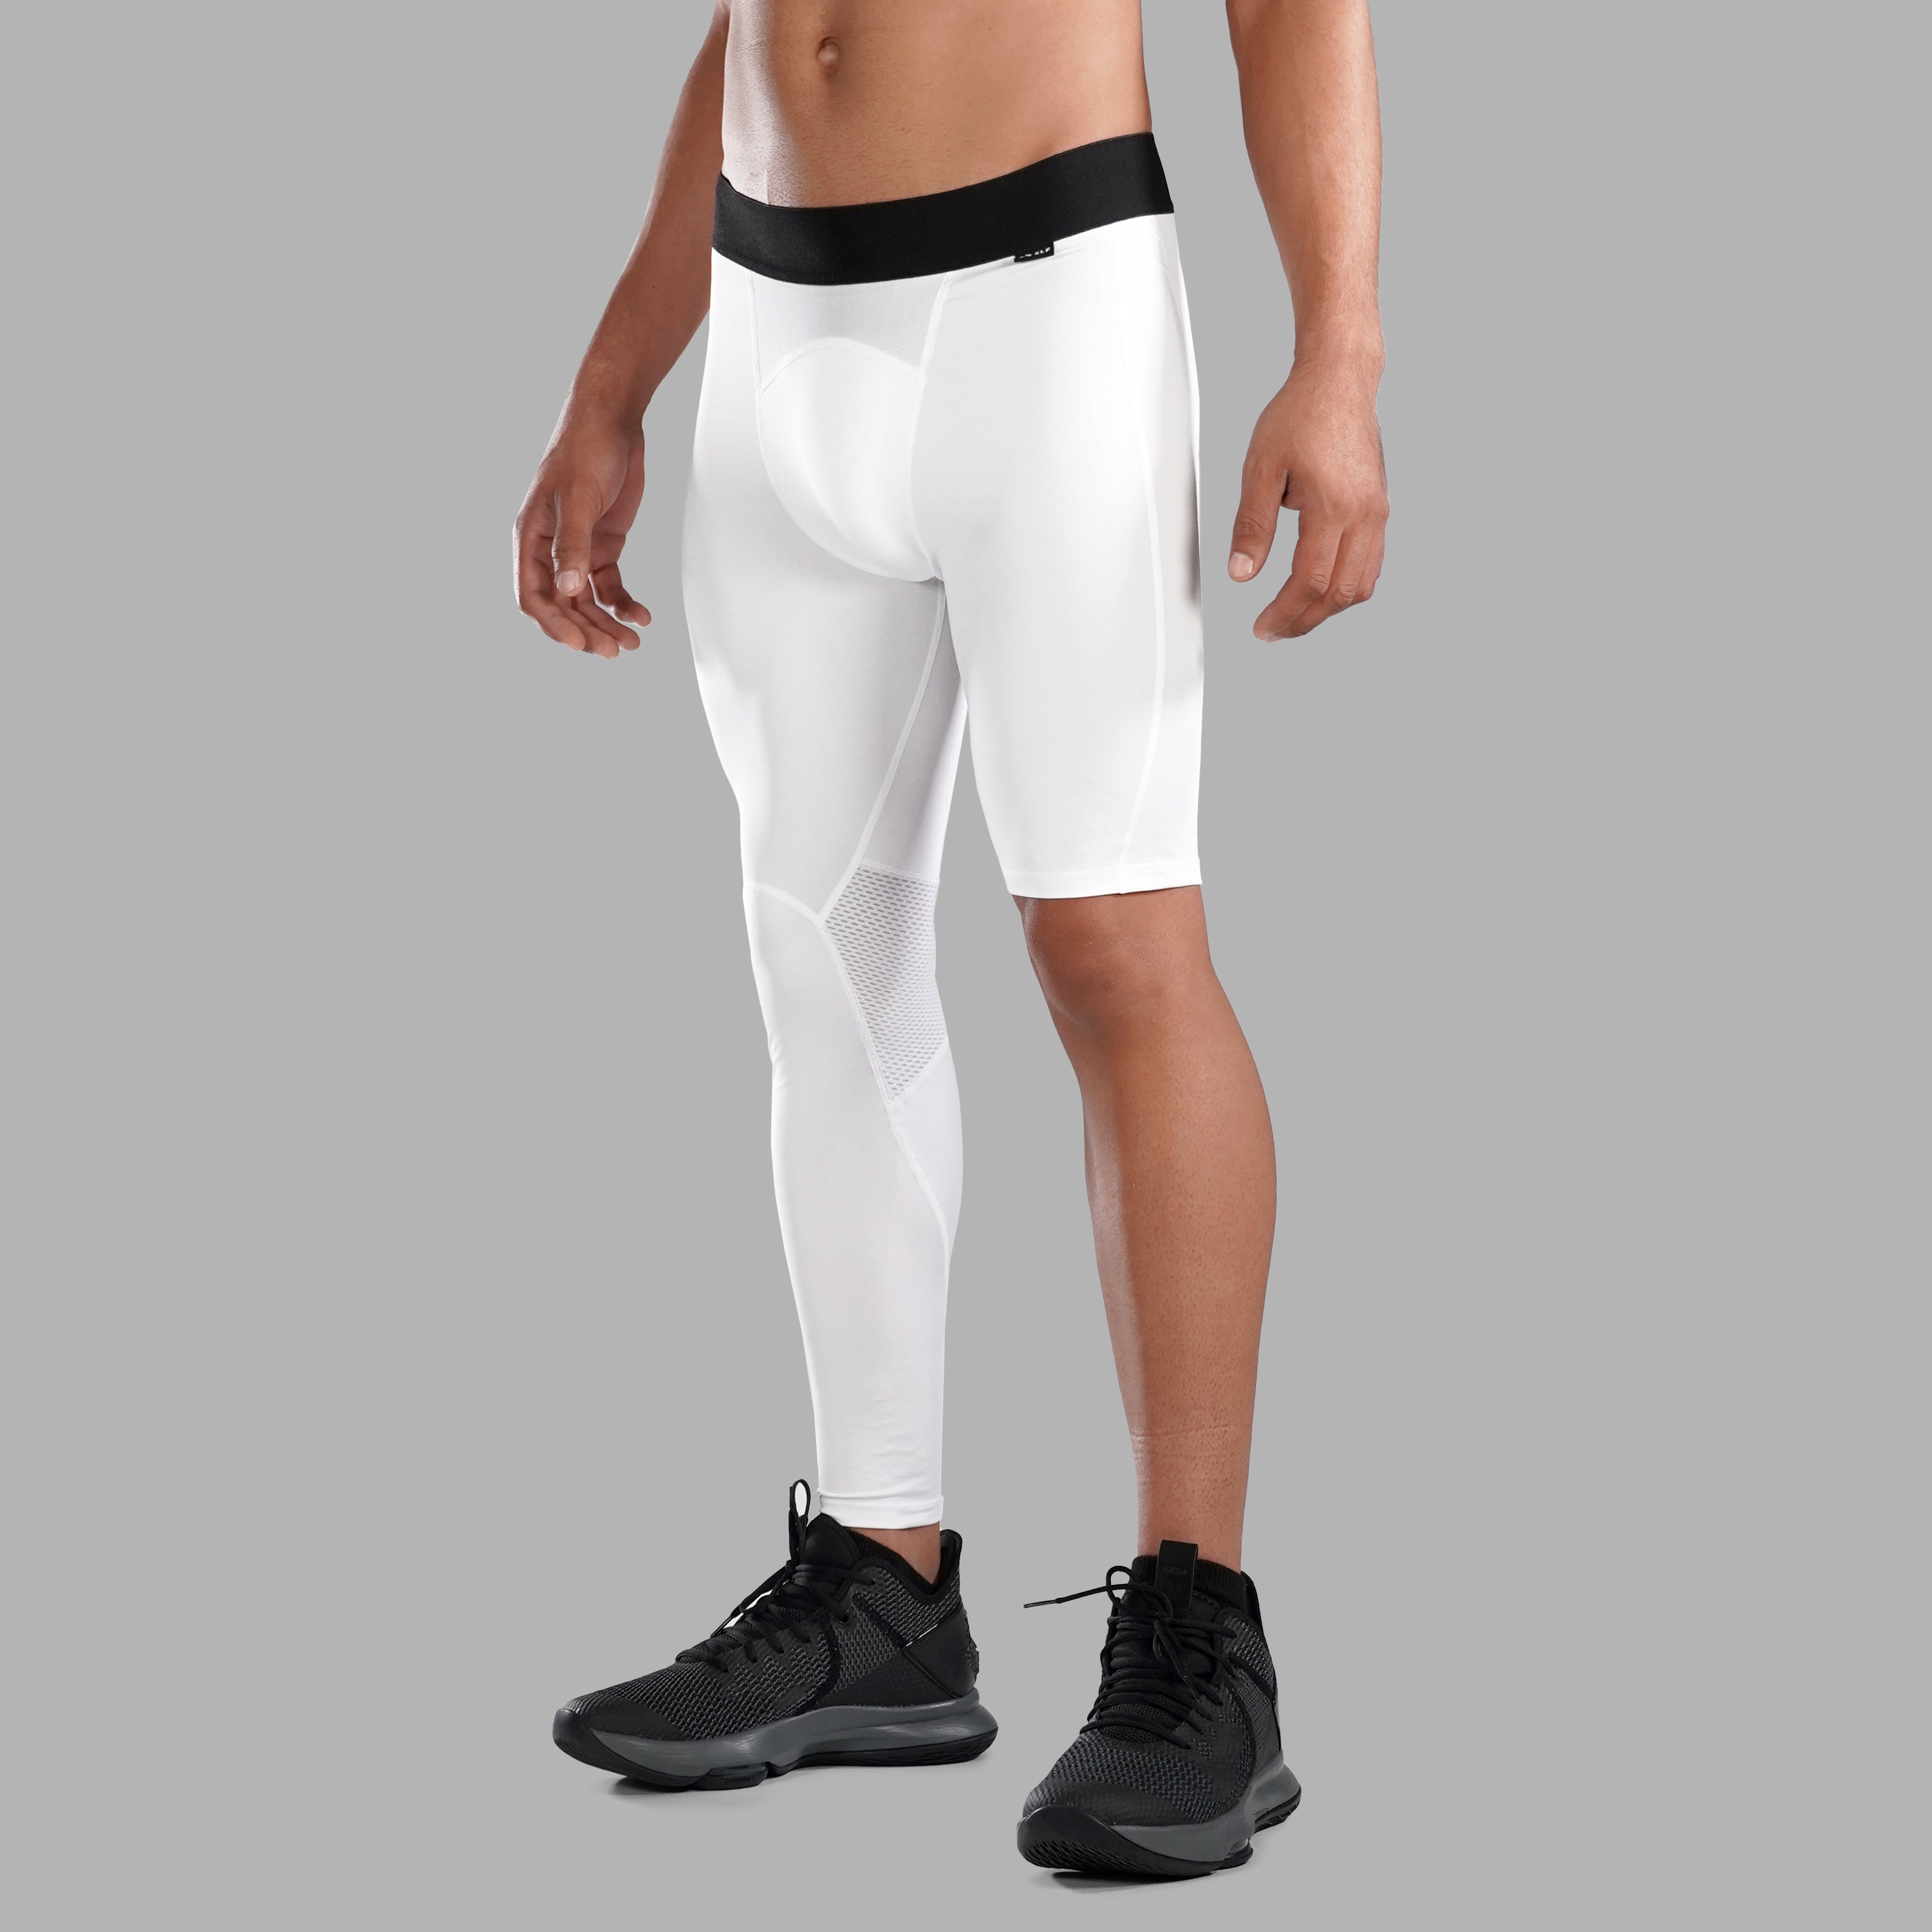 Basic White Single-leg Basketball Tights  Compression pants, Compression  tights, Tights workout